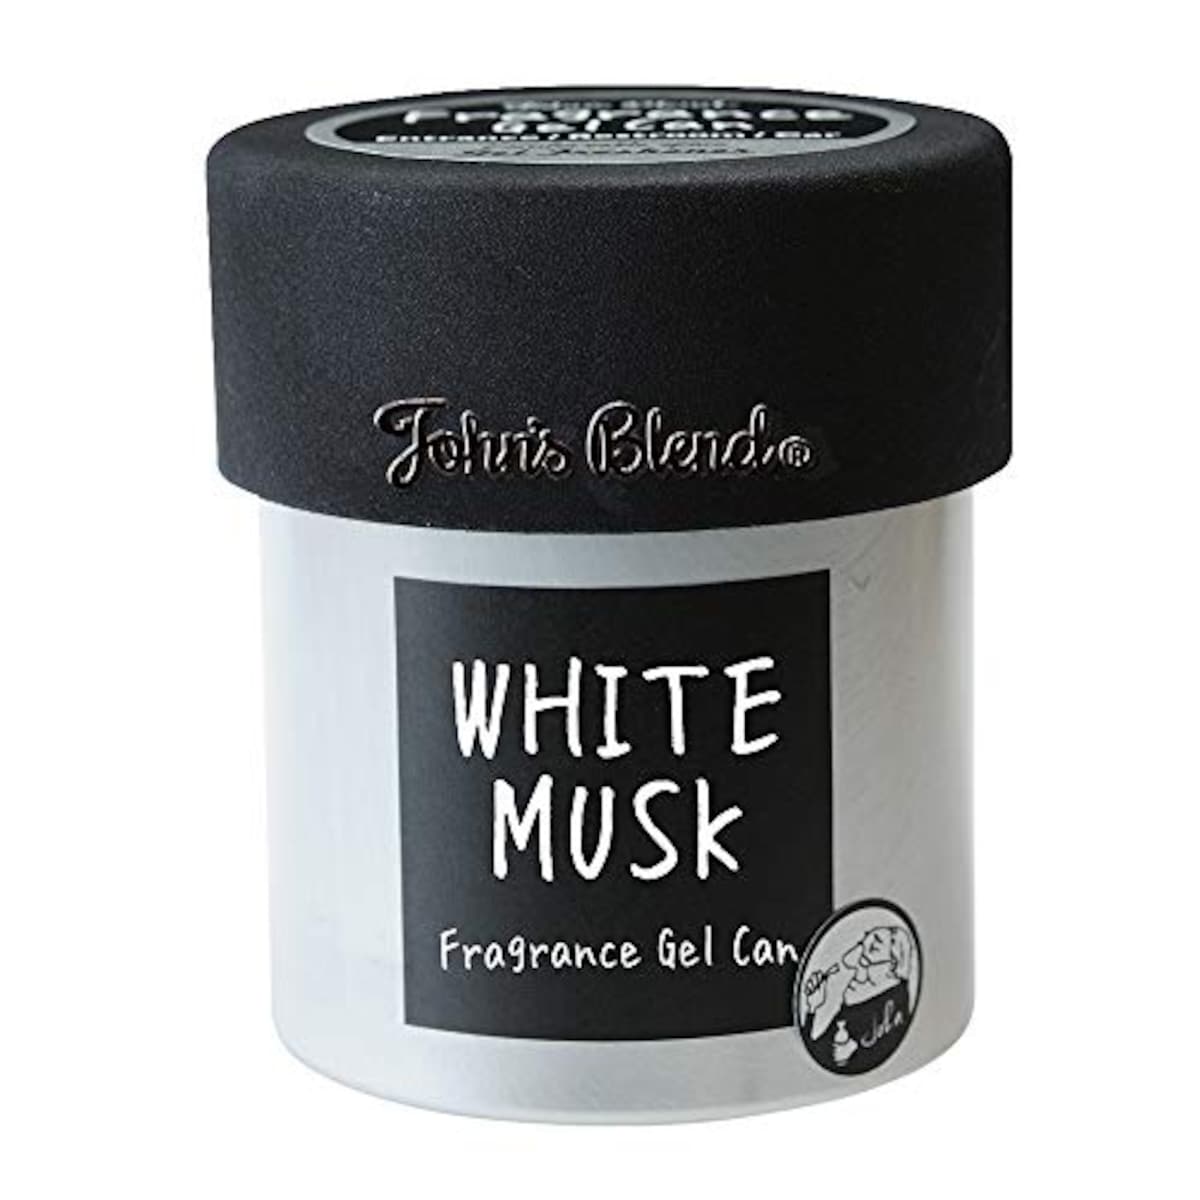 John's Blend 車用芳香剤 フレグランスジェル缶 